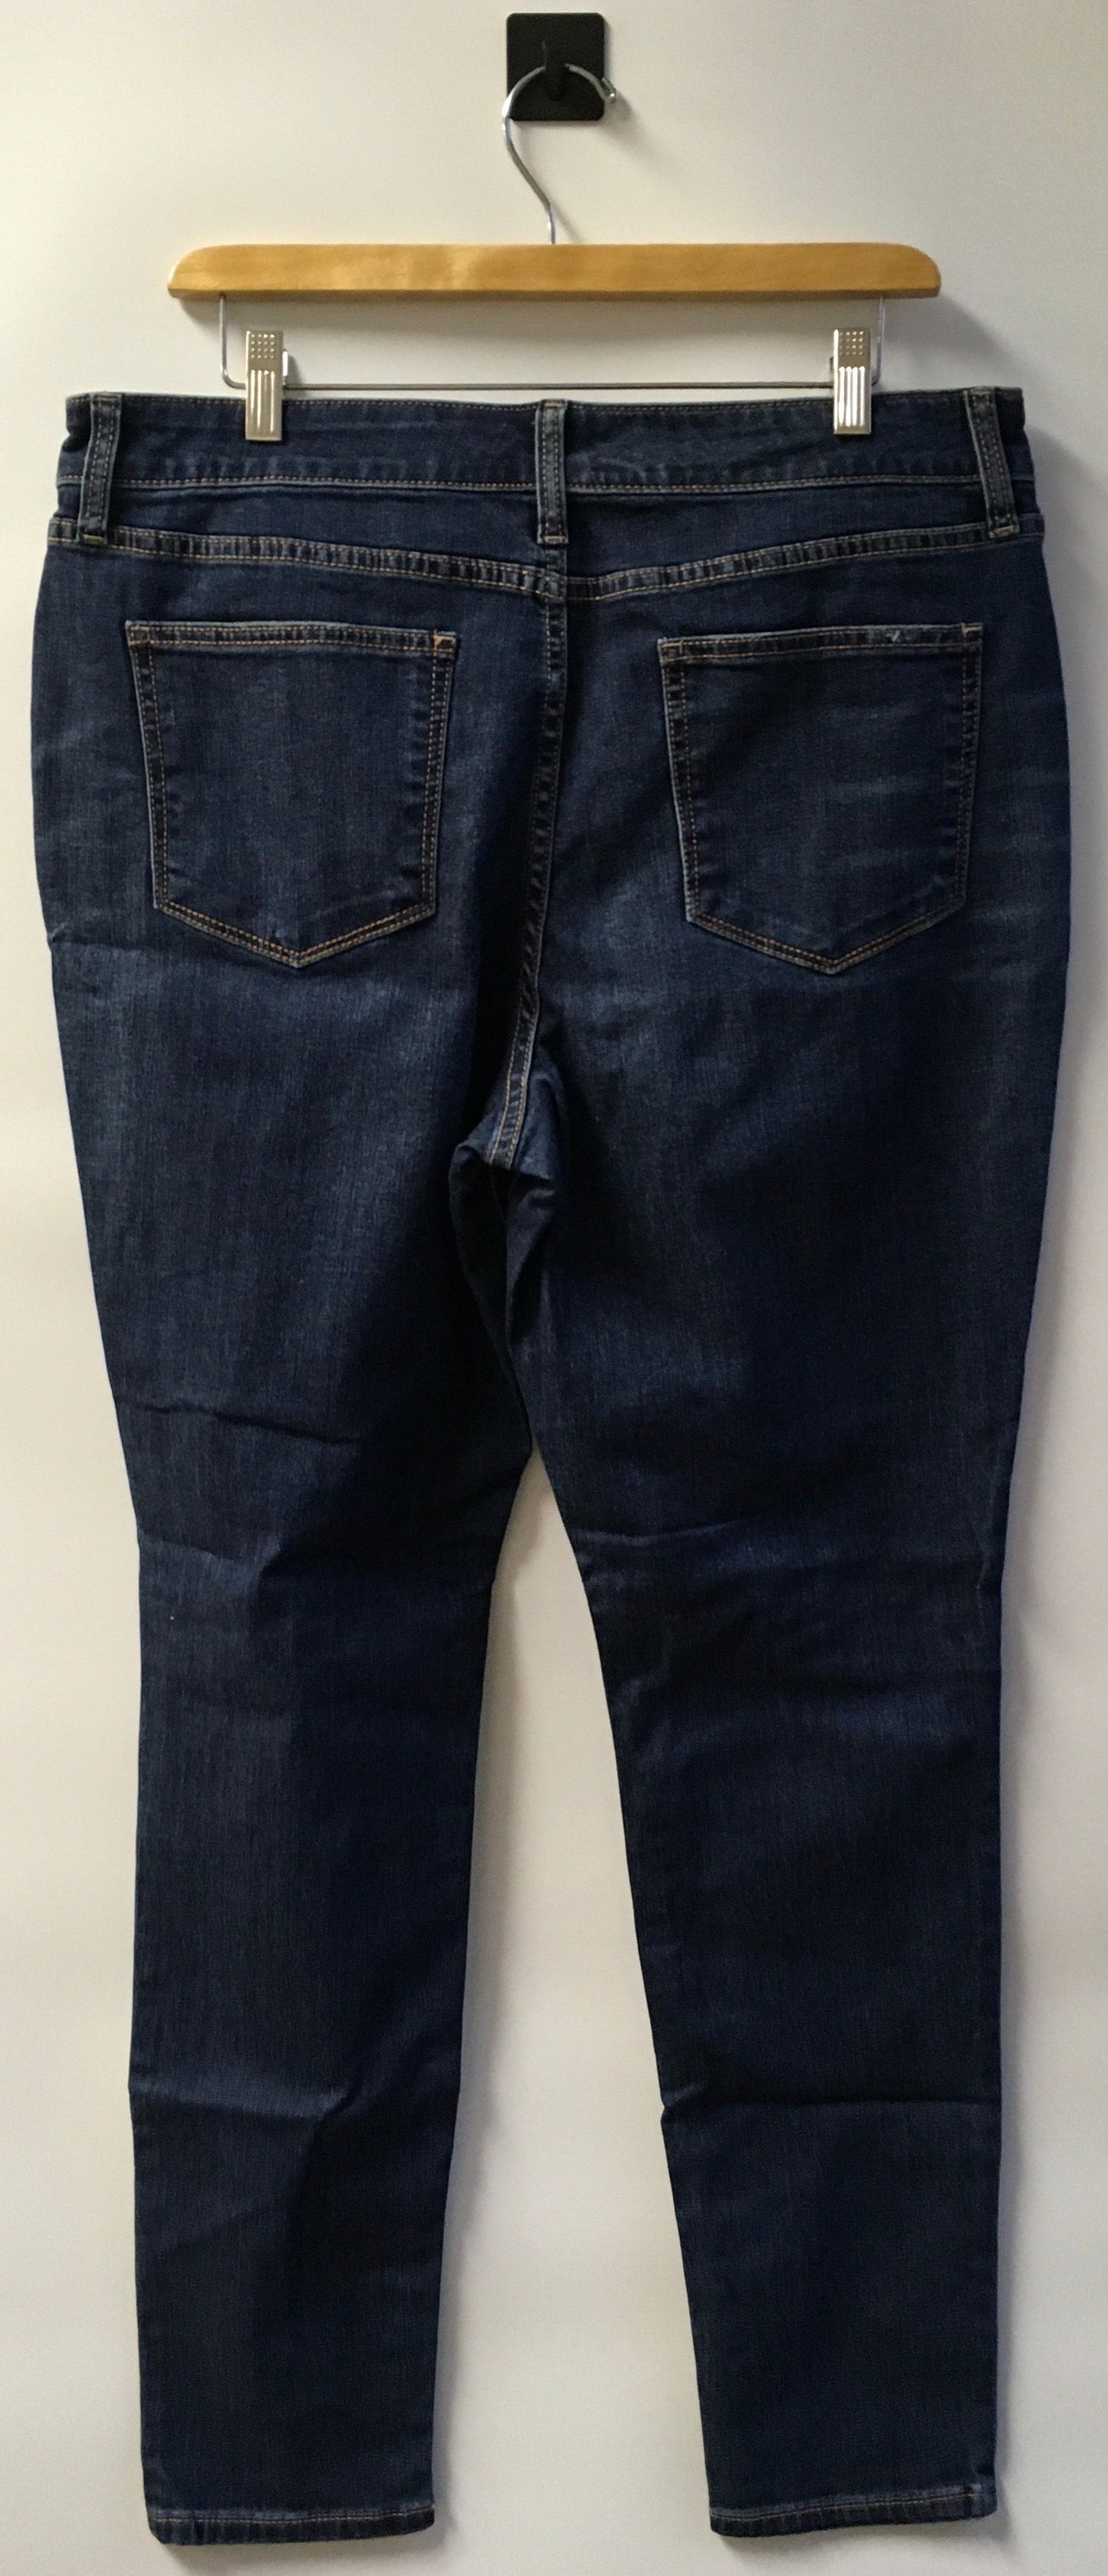 Jeans Skinny By St Johns Bay  Size: 16l